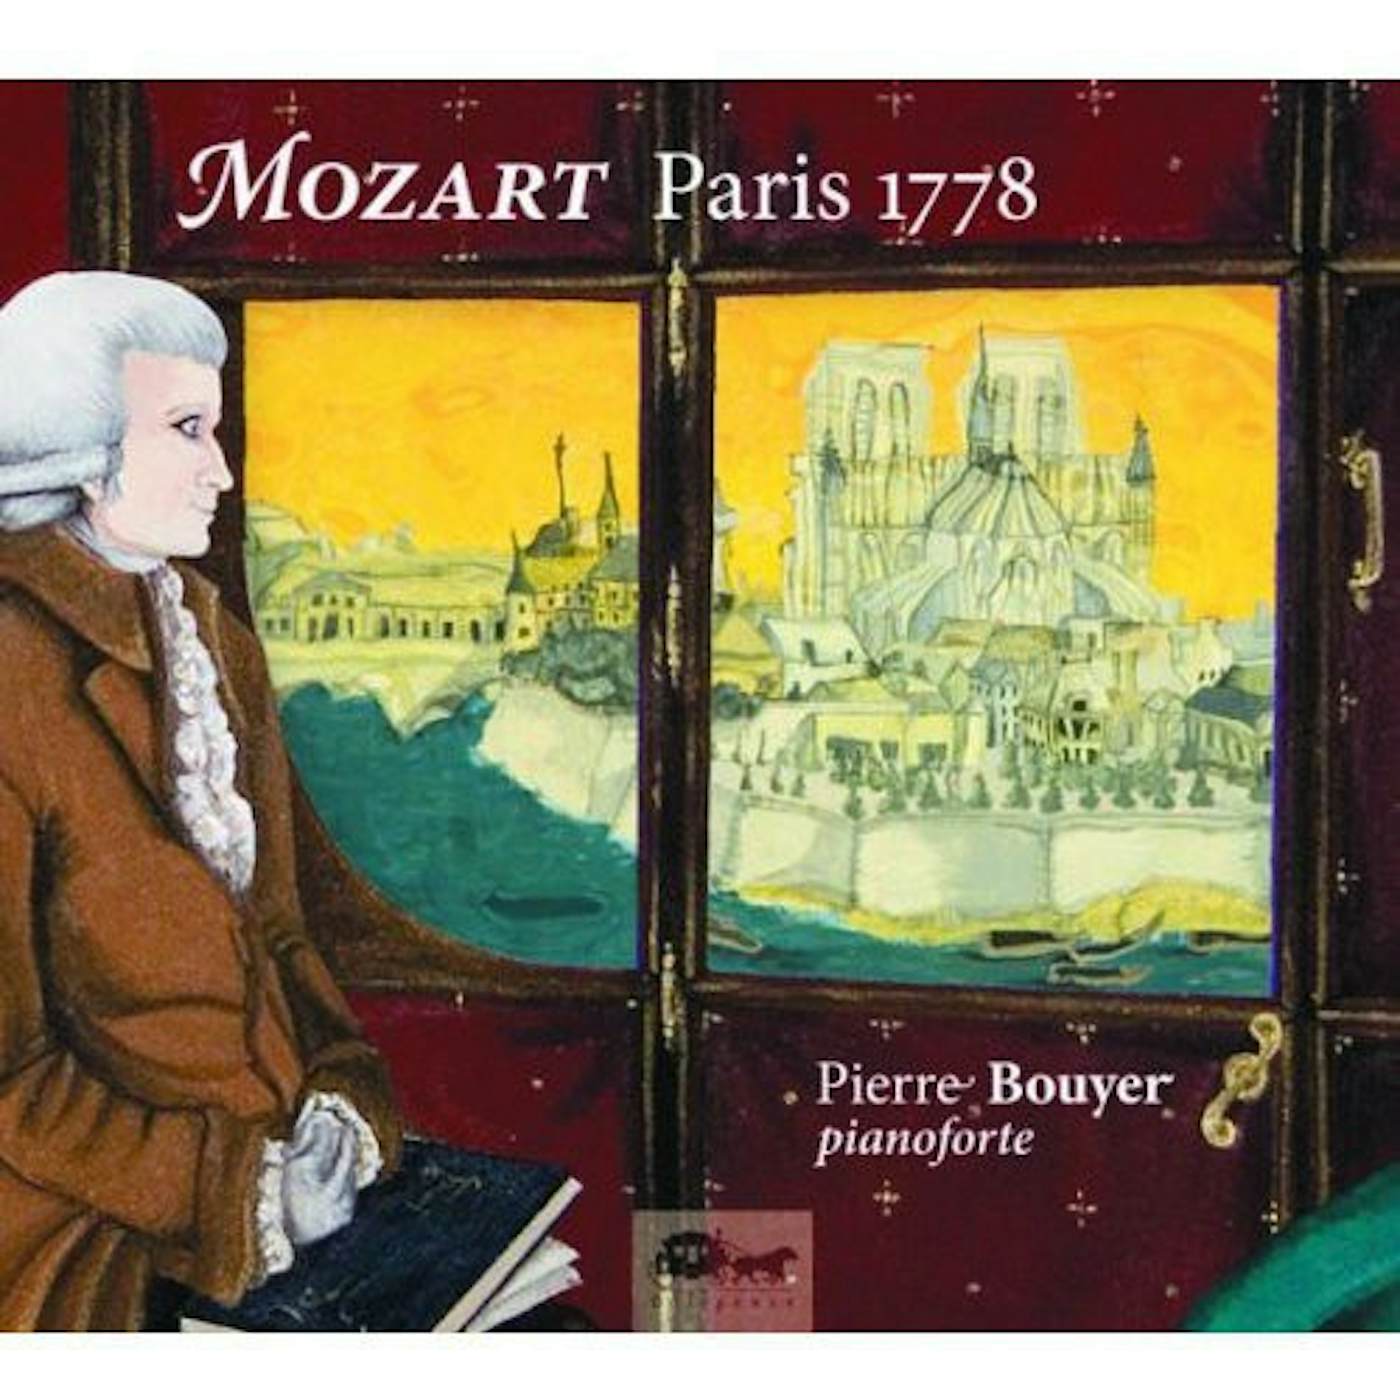 W.A. Mozart PARIS 1778 CD